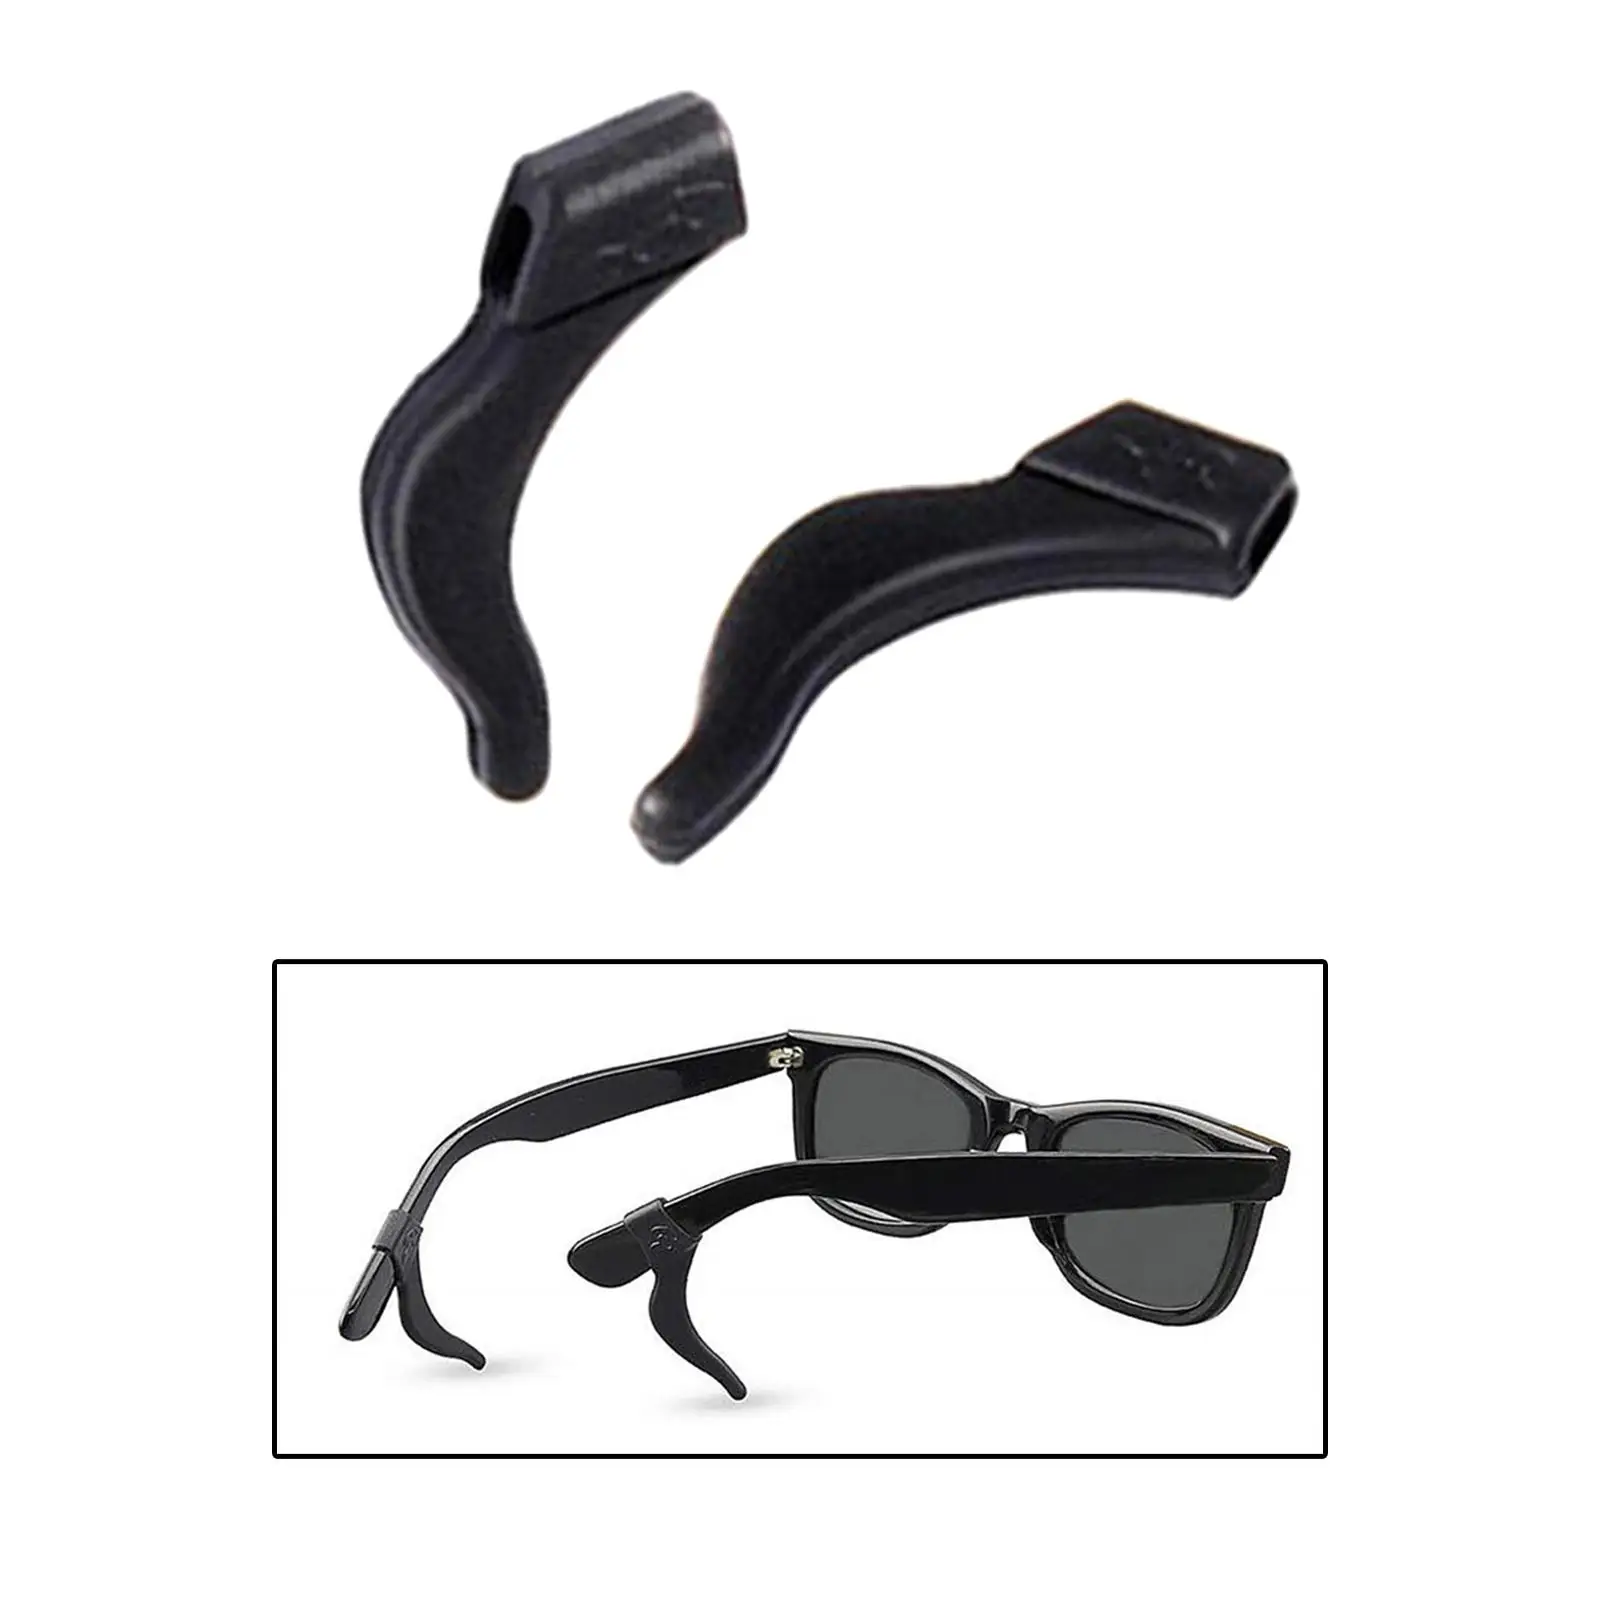 1 Pair Anti Slip Eyeglass Ear Hook Silicone High Temperature Resistance Eye Glasses Temple Tip Holder Soft Eyeglasses Grip